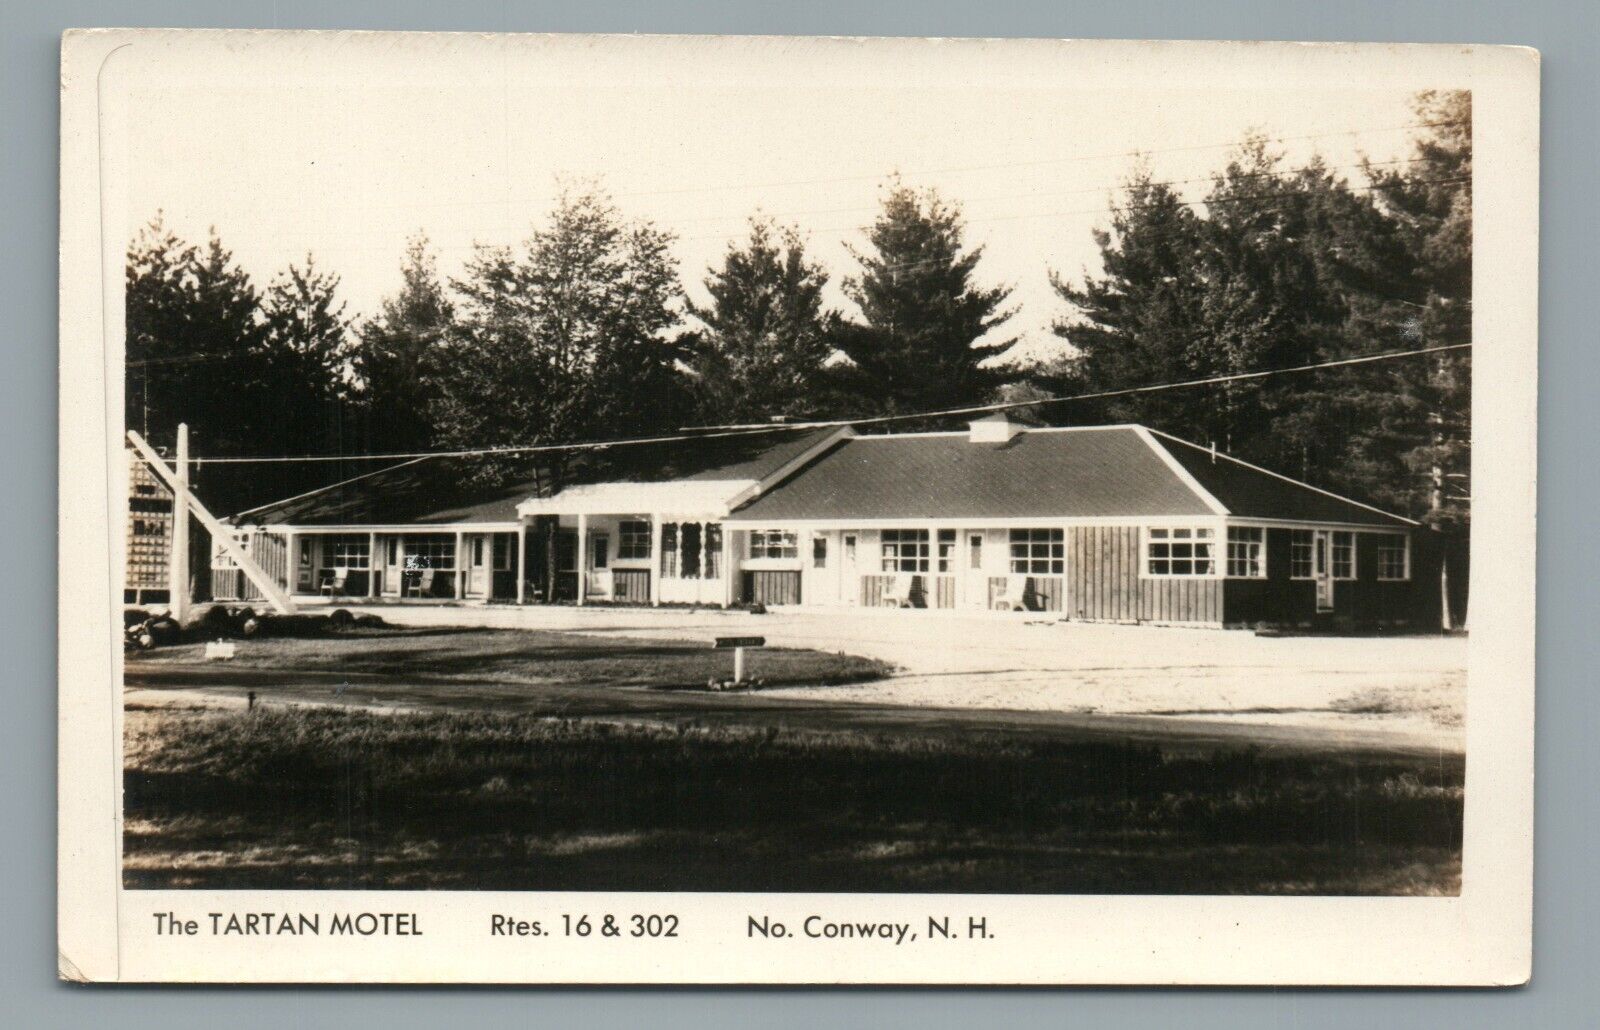 The Tartan Motel - Rtes. 16 & 302 - North Conway NH - RPPC Postcard